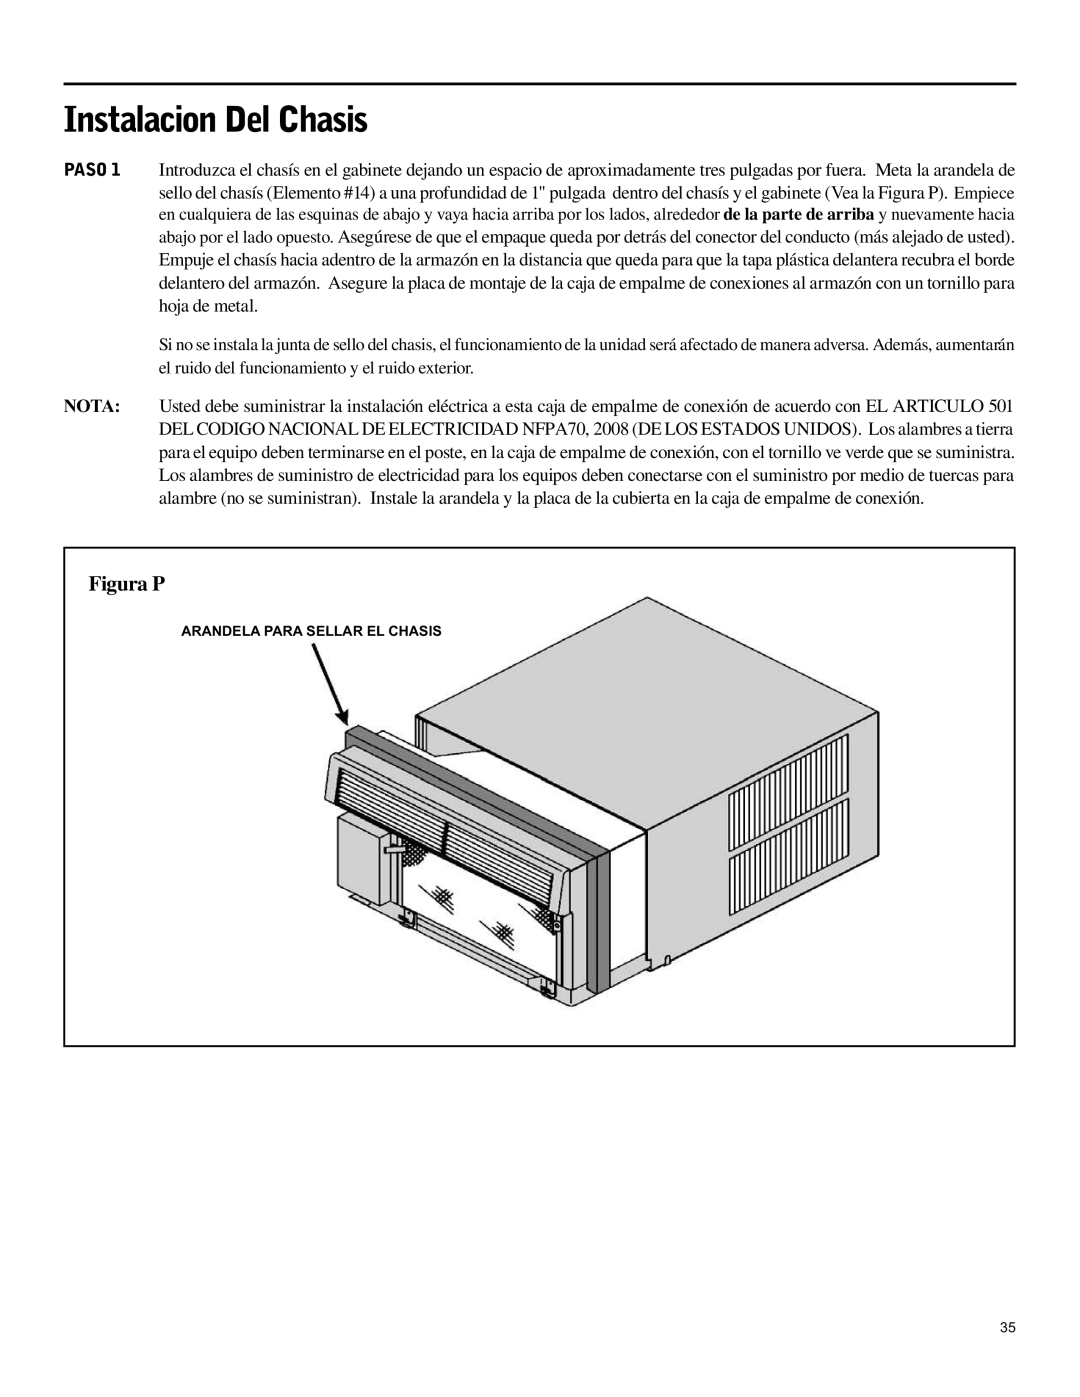 Friedrich SH15 operation manual Instalacion Del Chasis, Figura P 